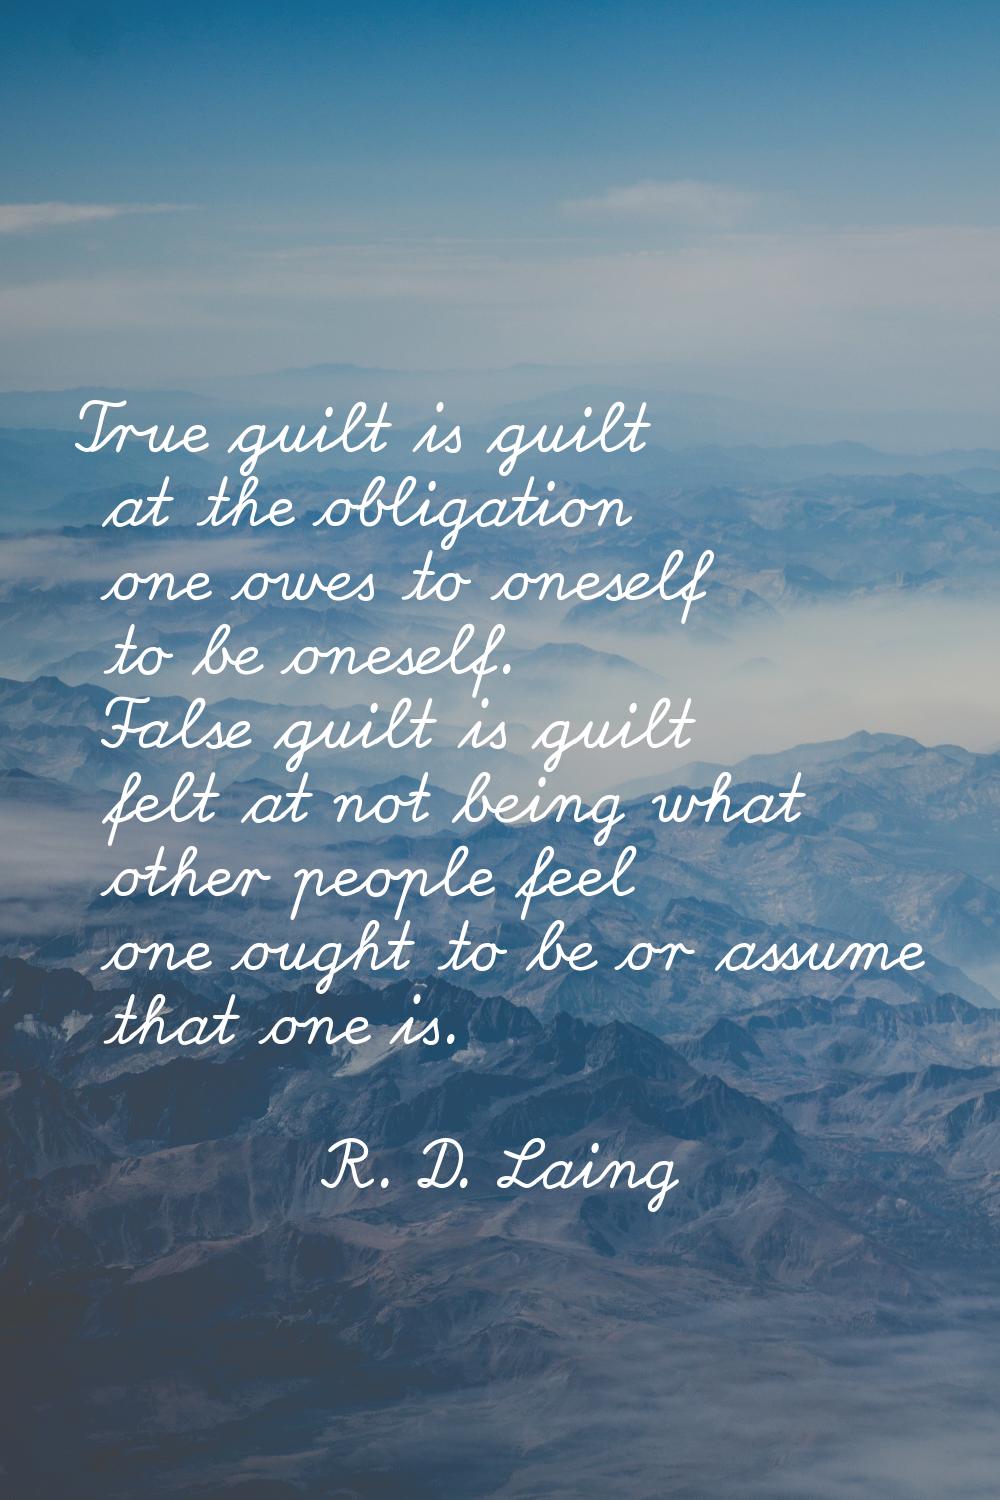 True guilt is guilt at the obligation one owes to oneself to be oneself. False guilt is guilt felt 